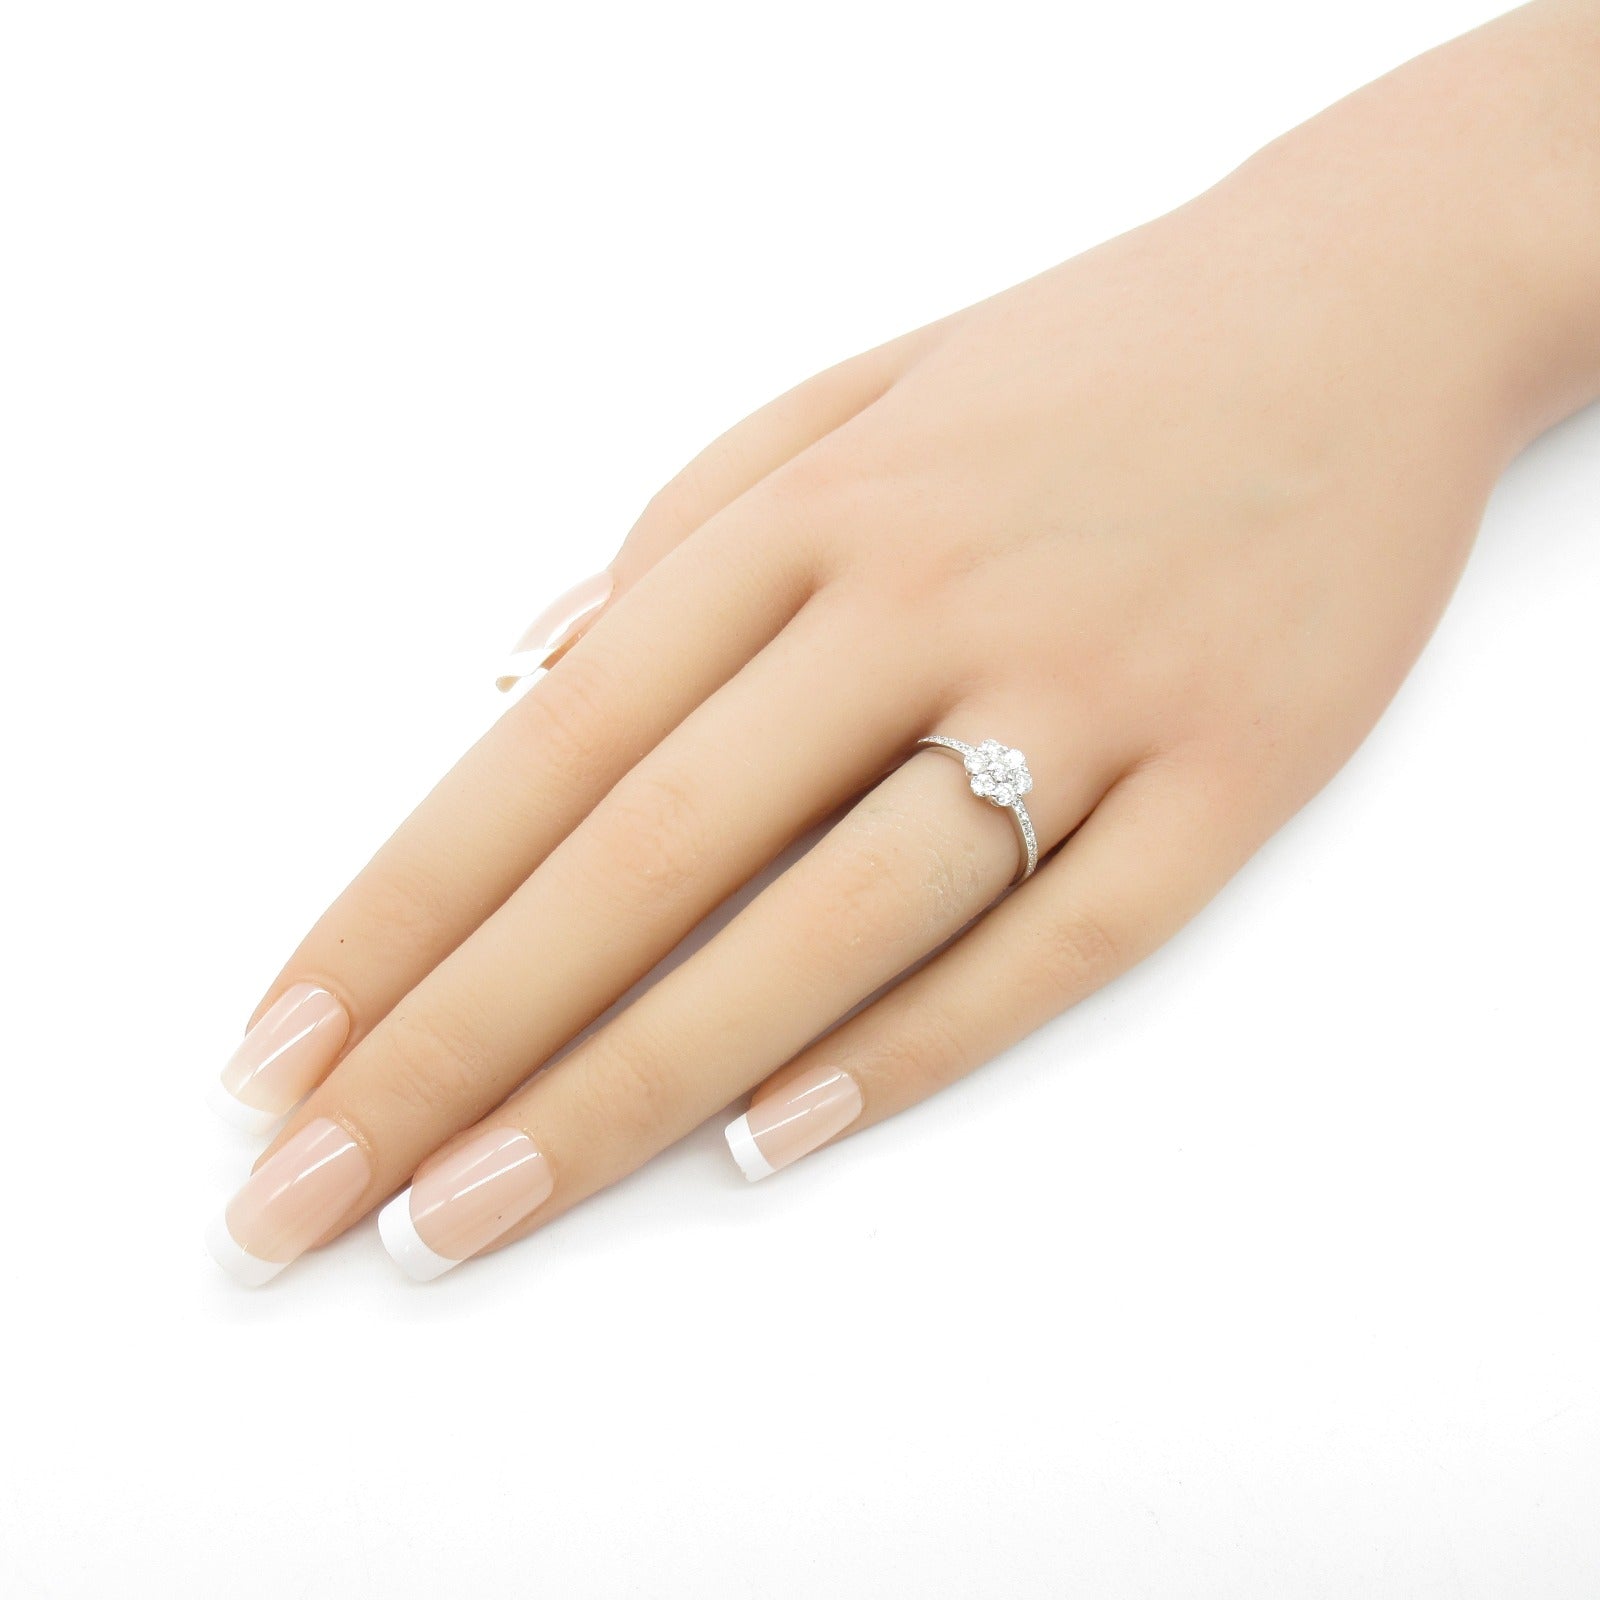 Jewelry Jewelry Diamond Ring Ring Ring Jewelry K18WG (White G) Diamond  Clear Diamond 1.9g